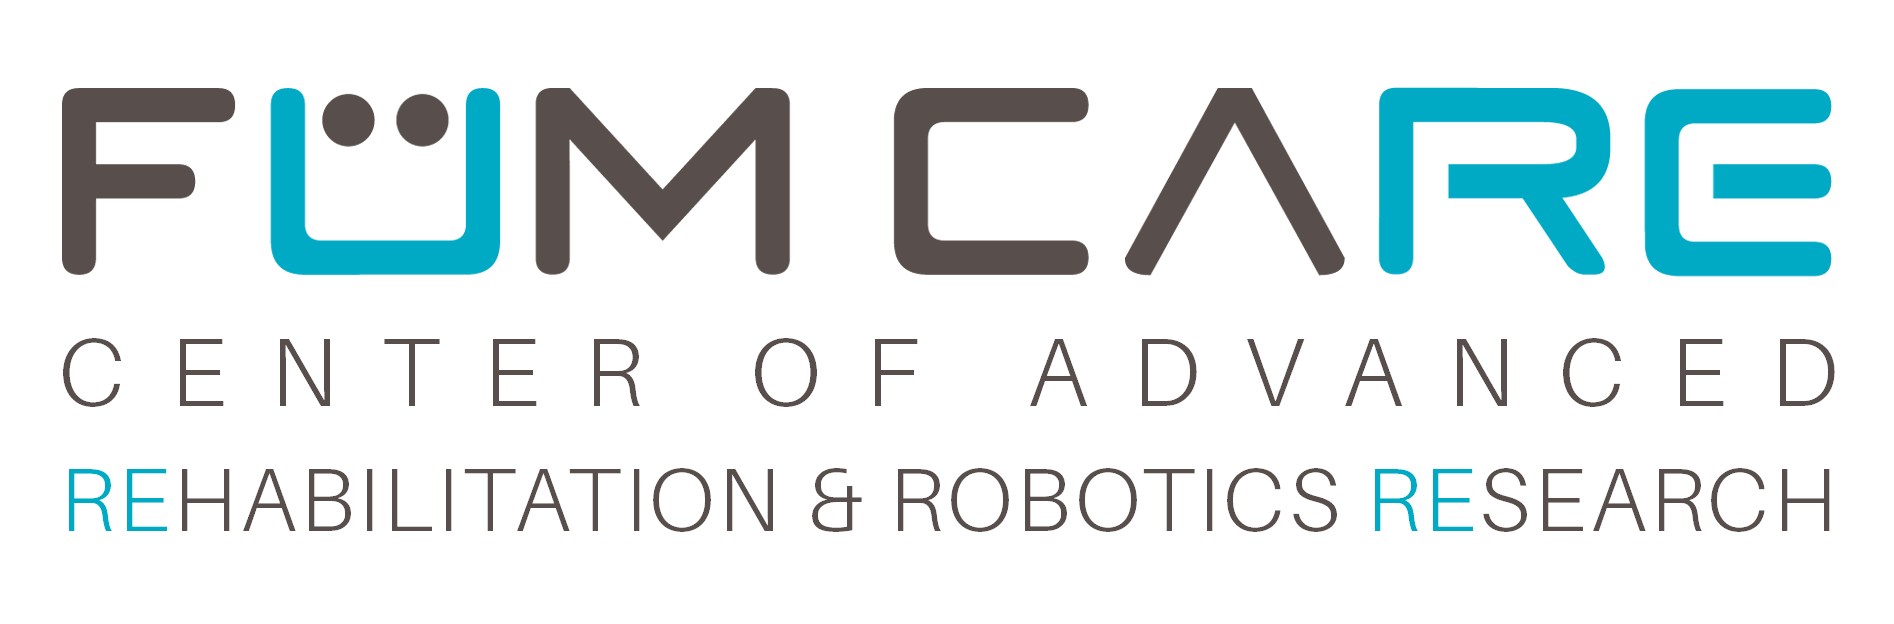 FUM Center of Advanced Rehabilitation and Robotics Research (FUM CARE)